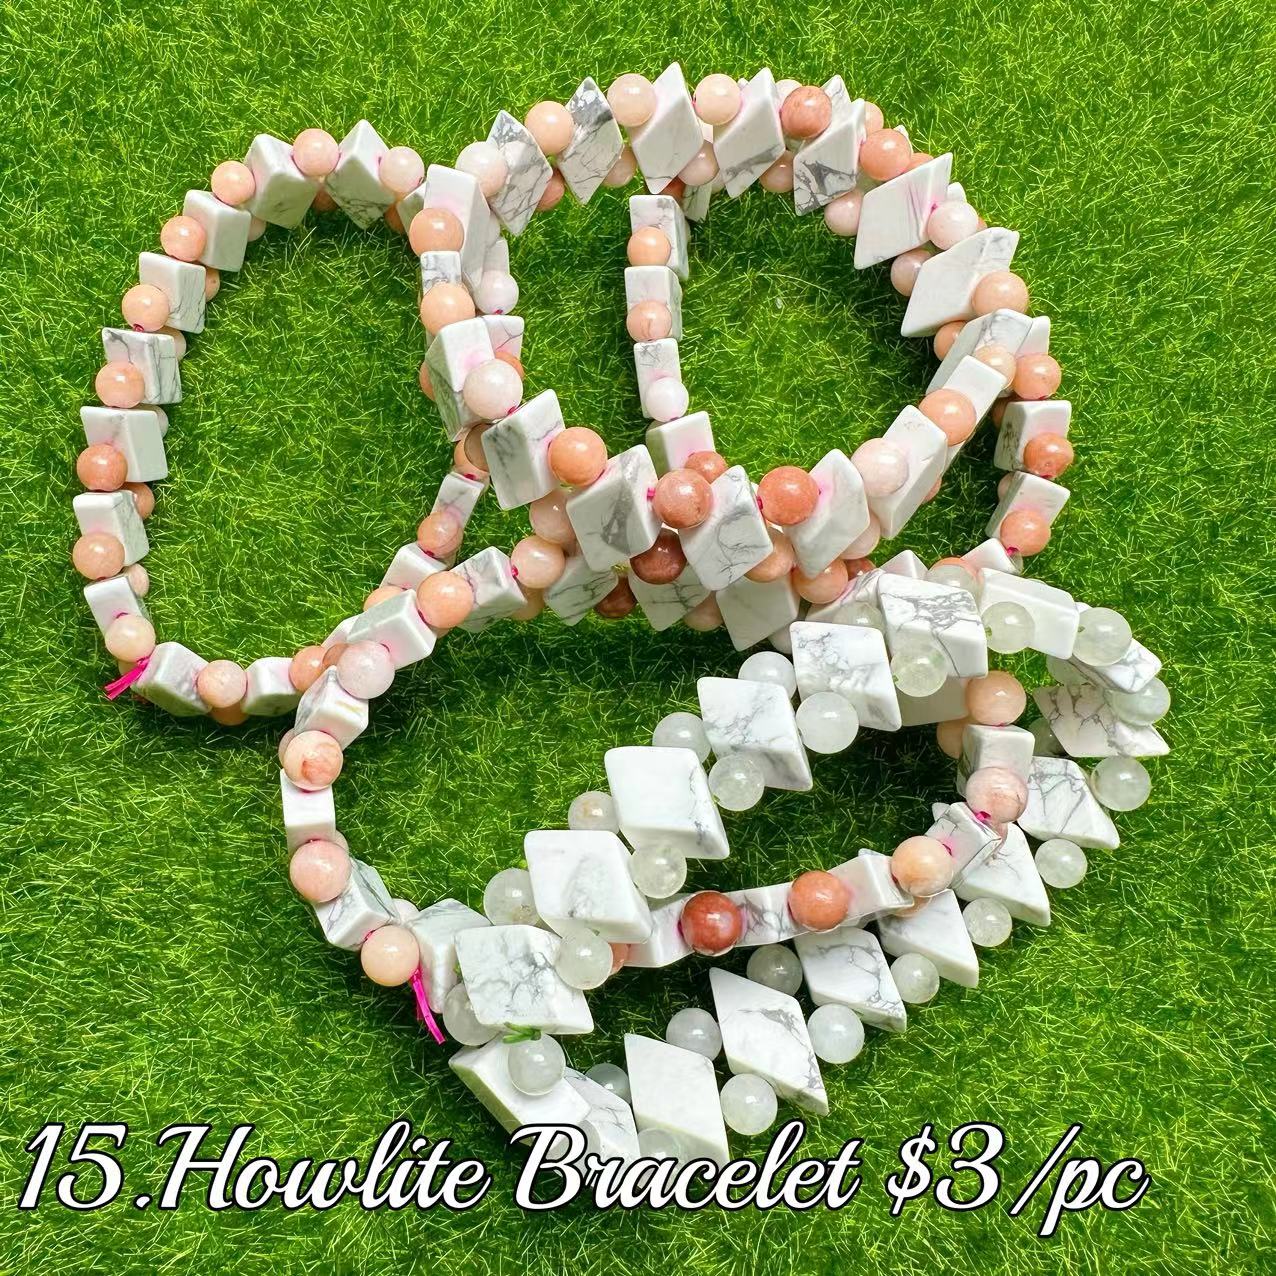 One bowl crystal diy bead-felicity00-can make 6pcs bracelet